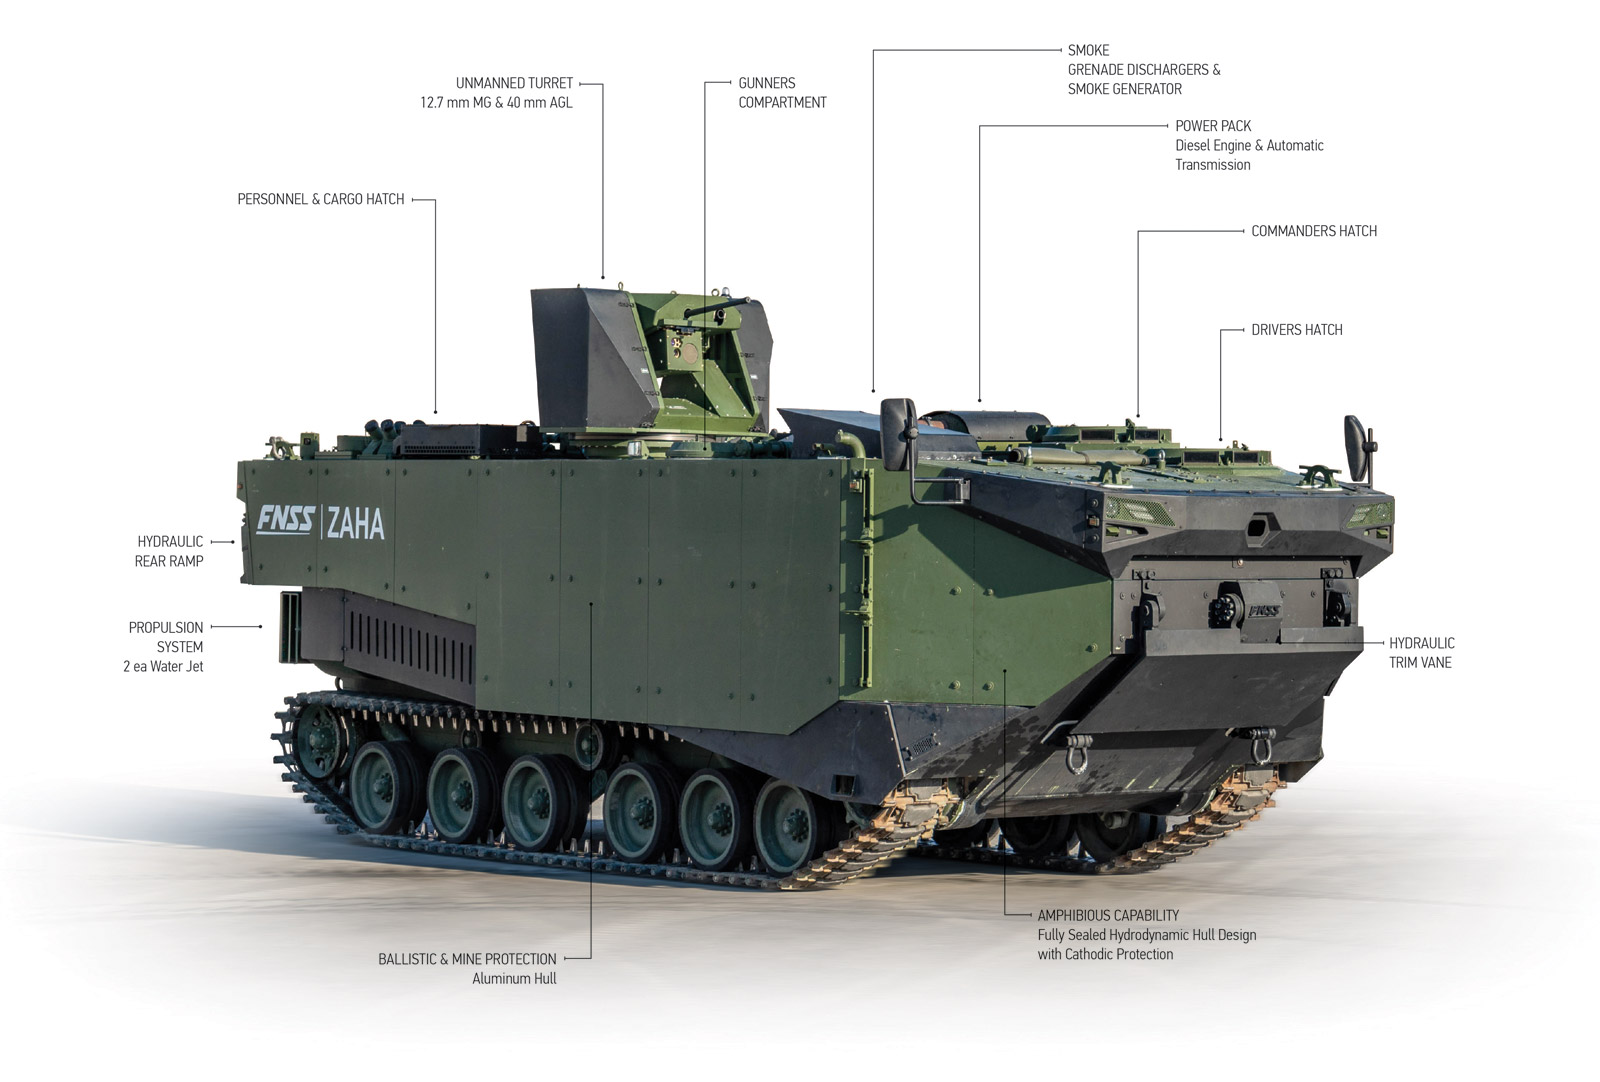 FNSS Zaha Marine Assault Vehicle (MAV)